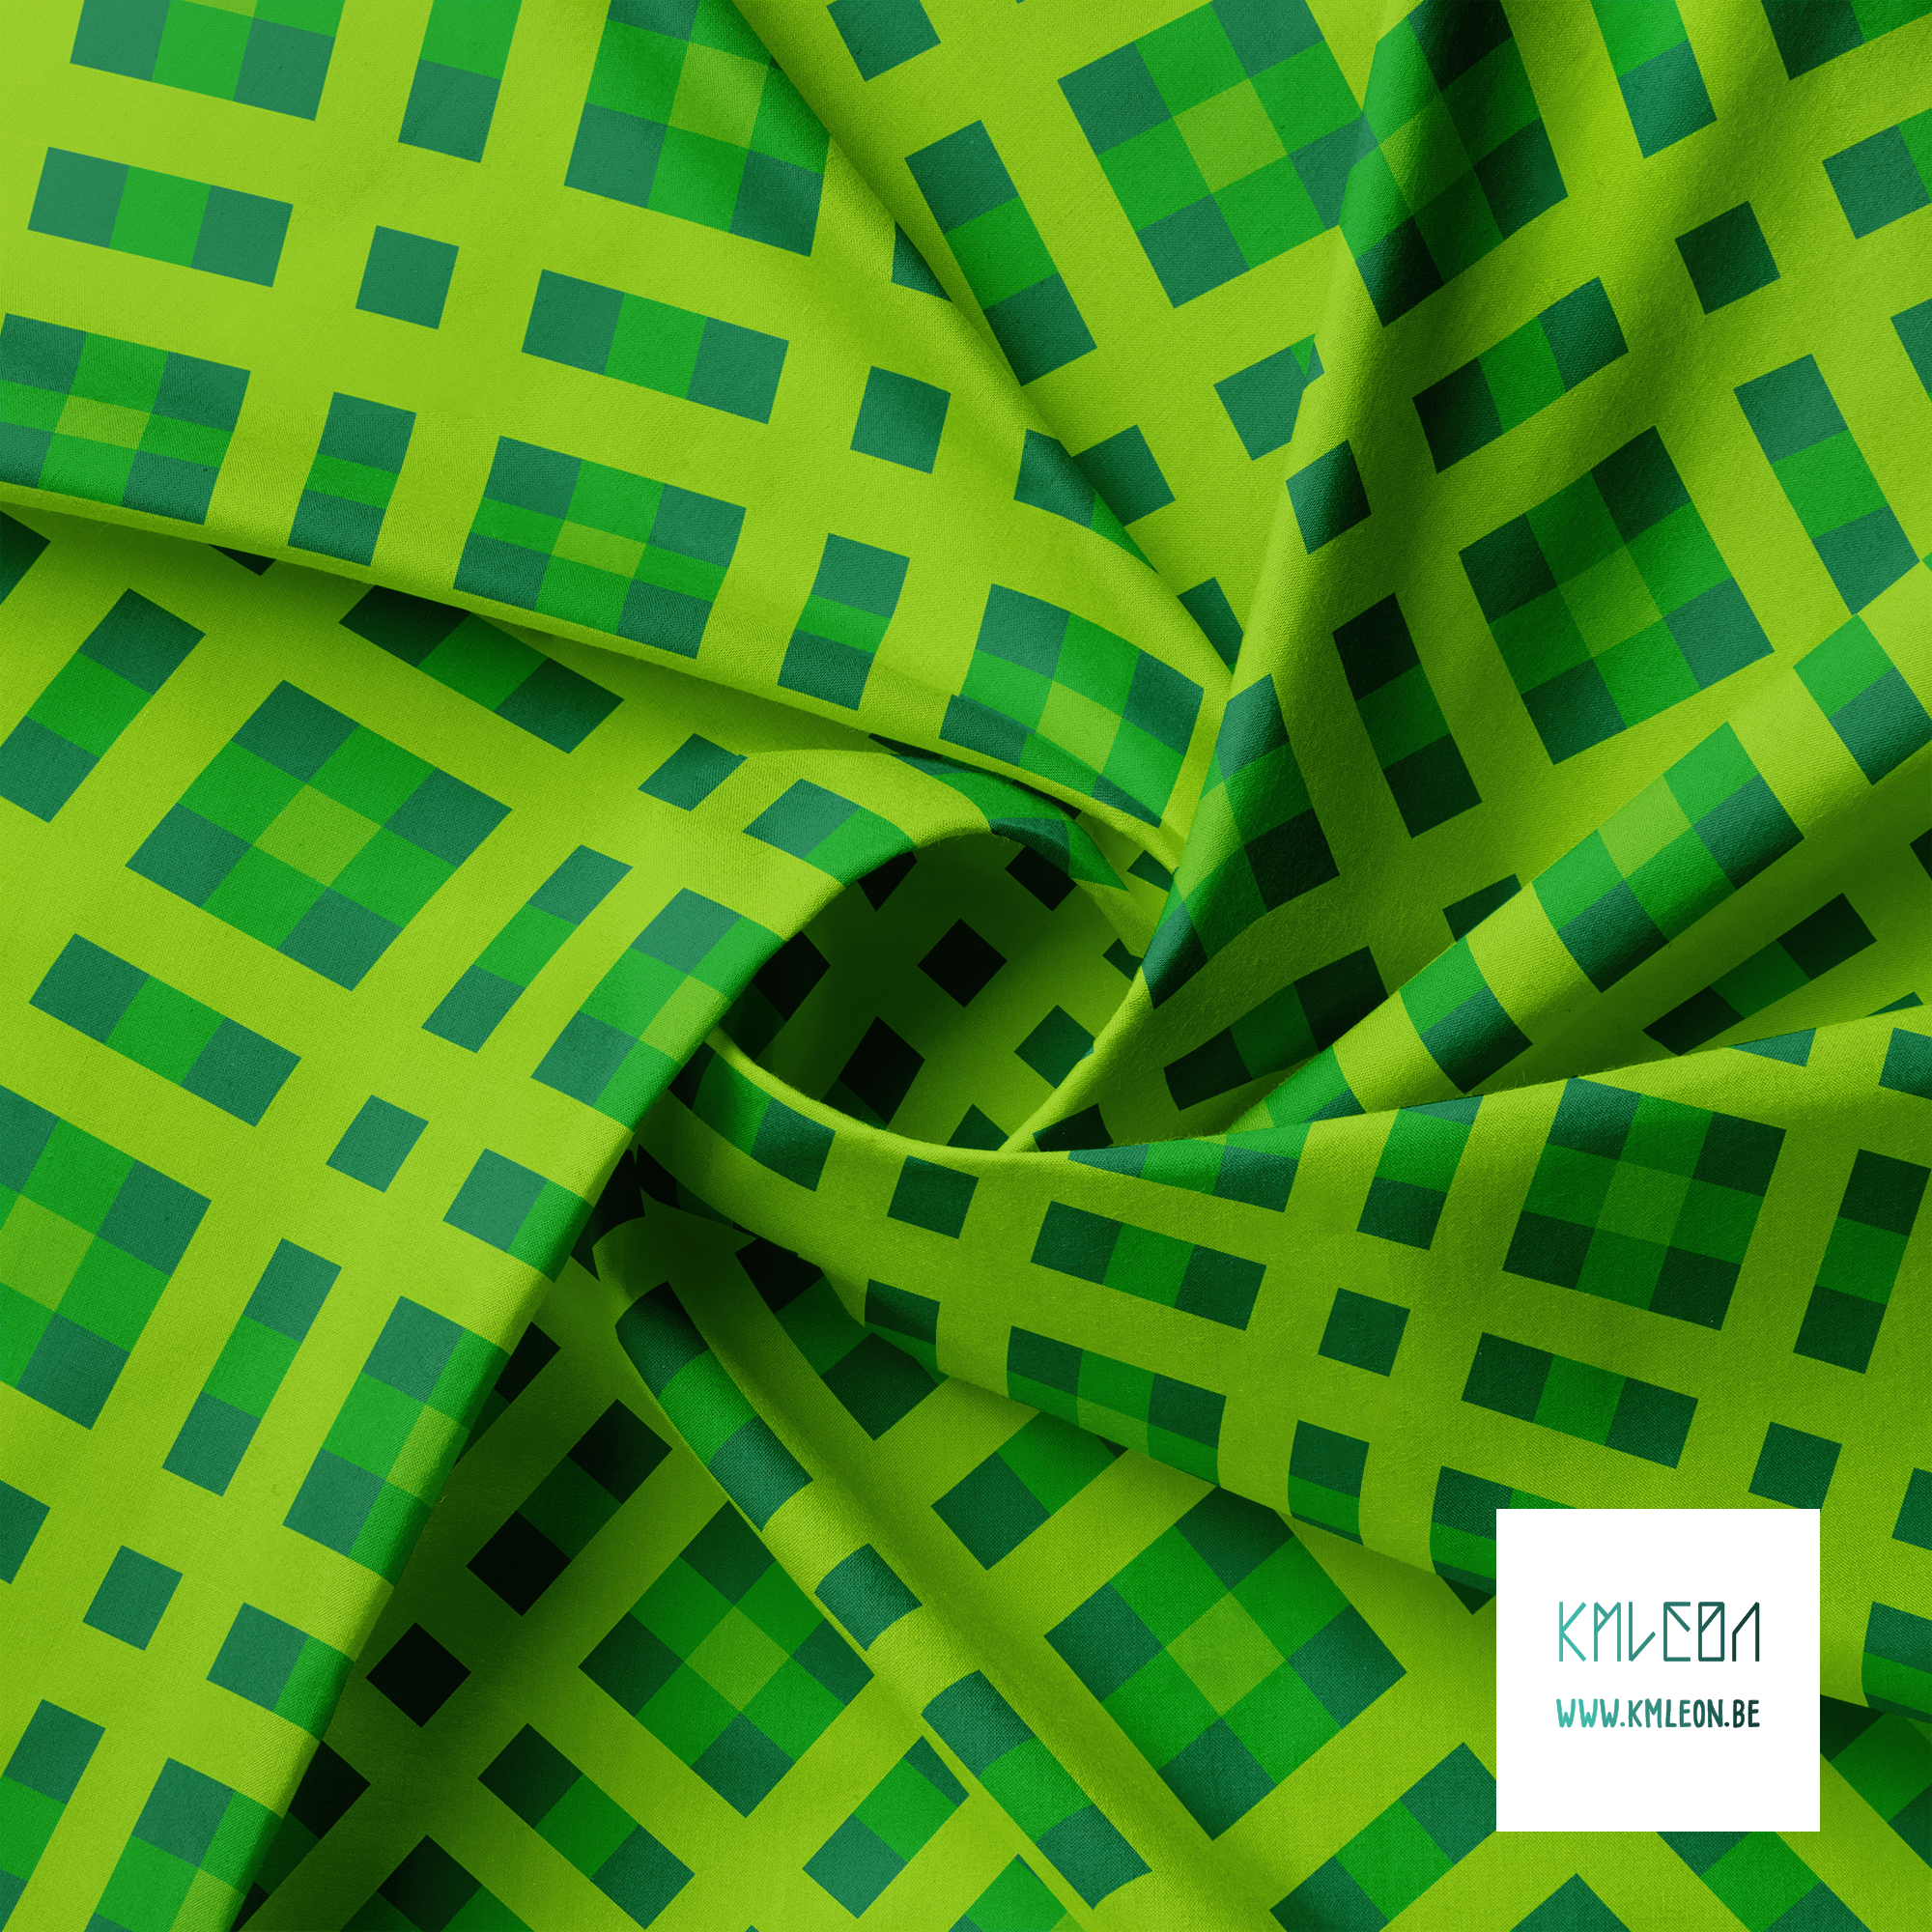 Green gingham fabric